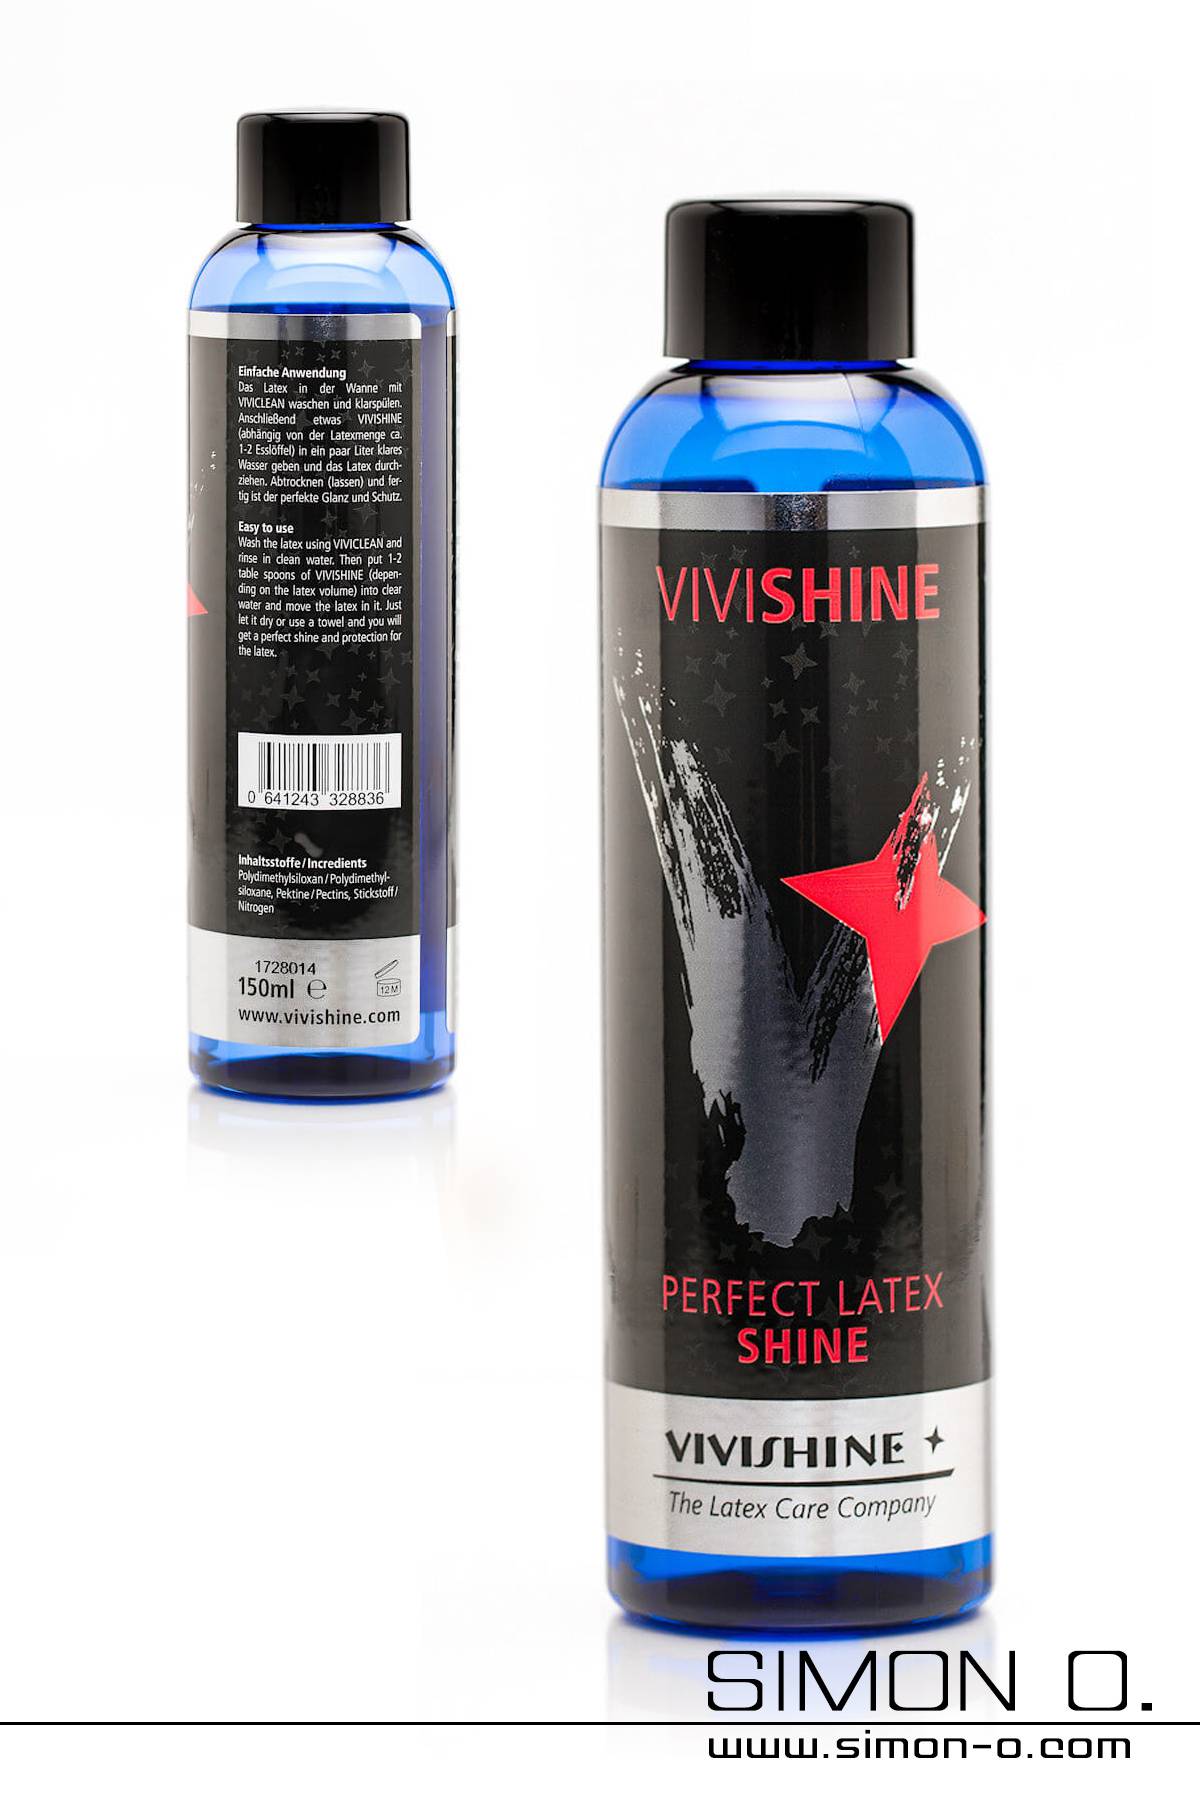 Latex shine polish by Vivishine in a blue bottle